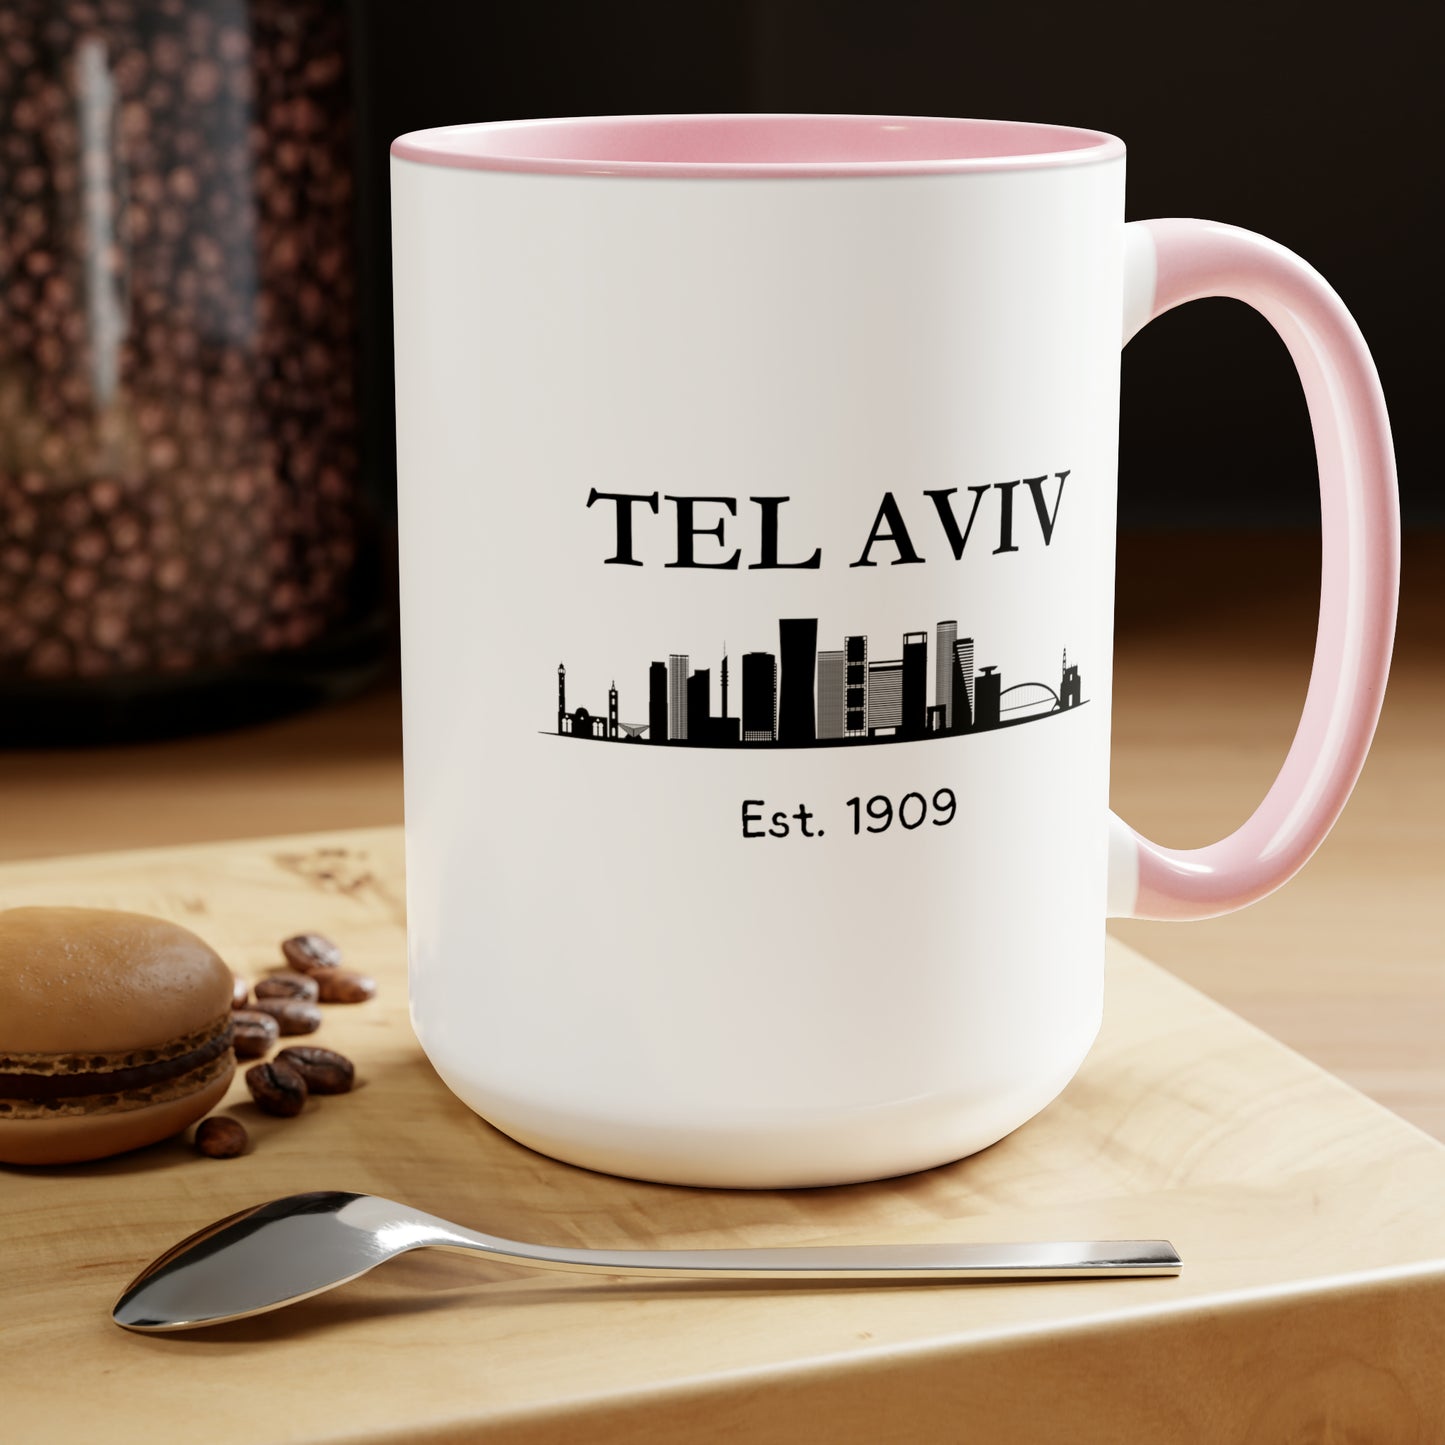 Tel Aviv - Est. 1909 - Accent Coffee Mug, 15oz